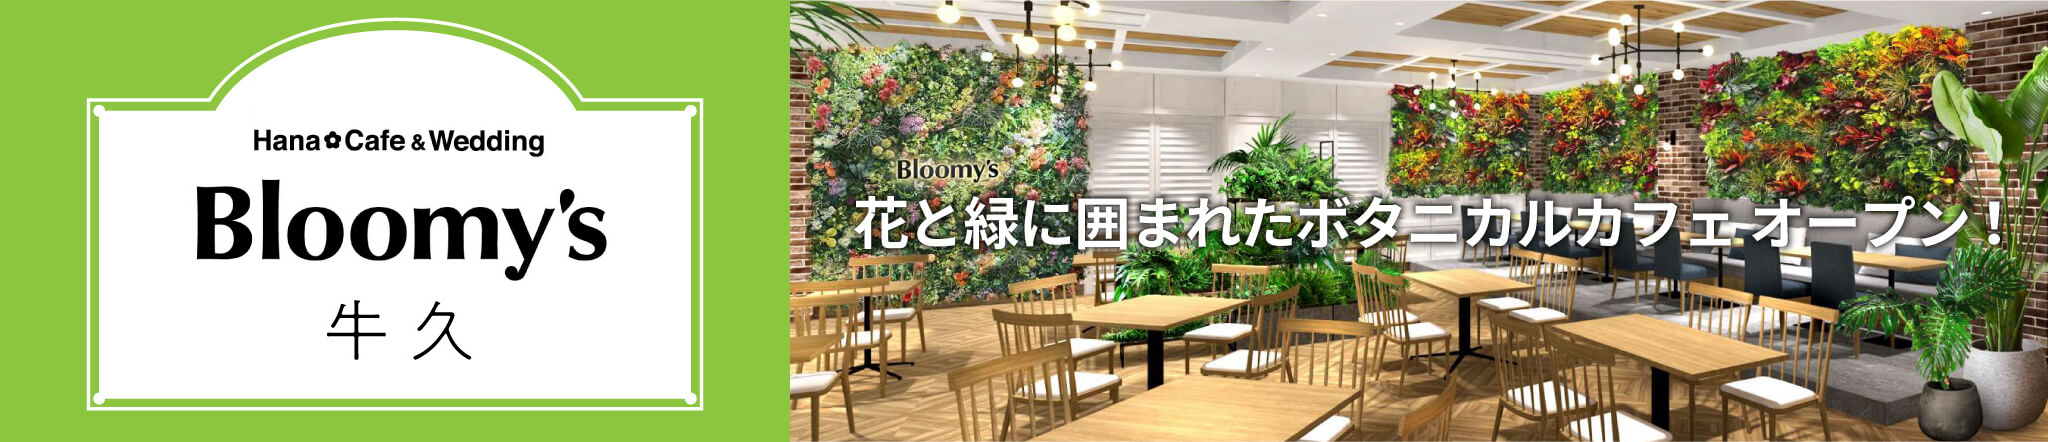 Bloomy's 牛久 6/1(WED) OPEN!